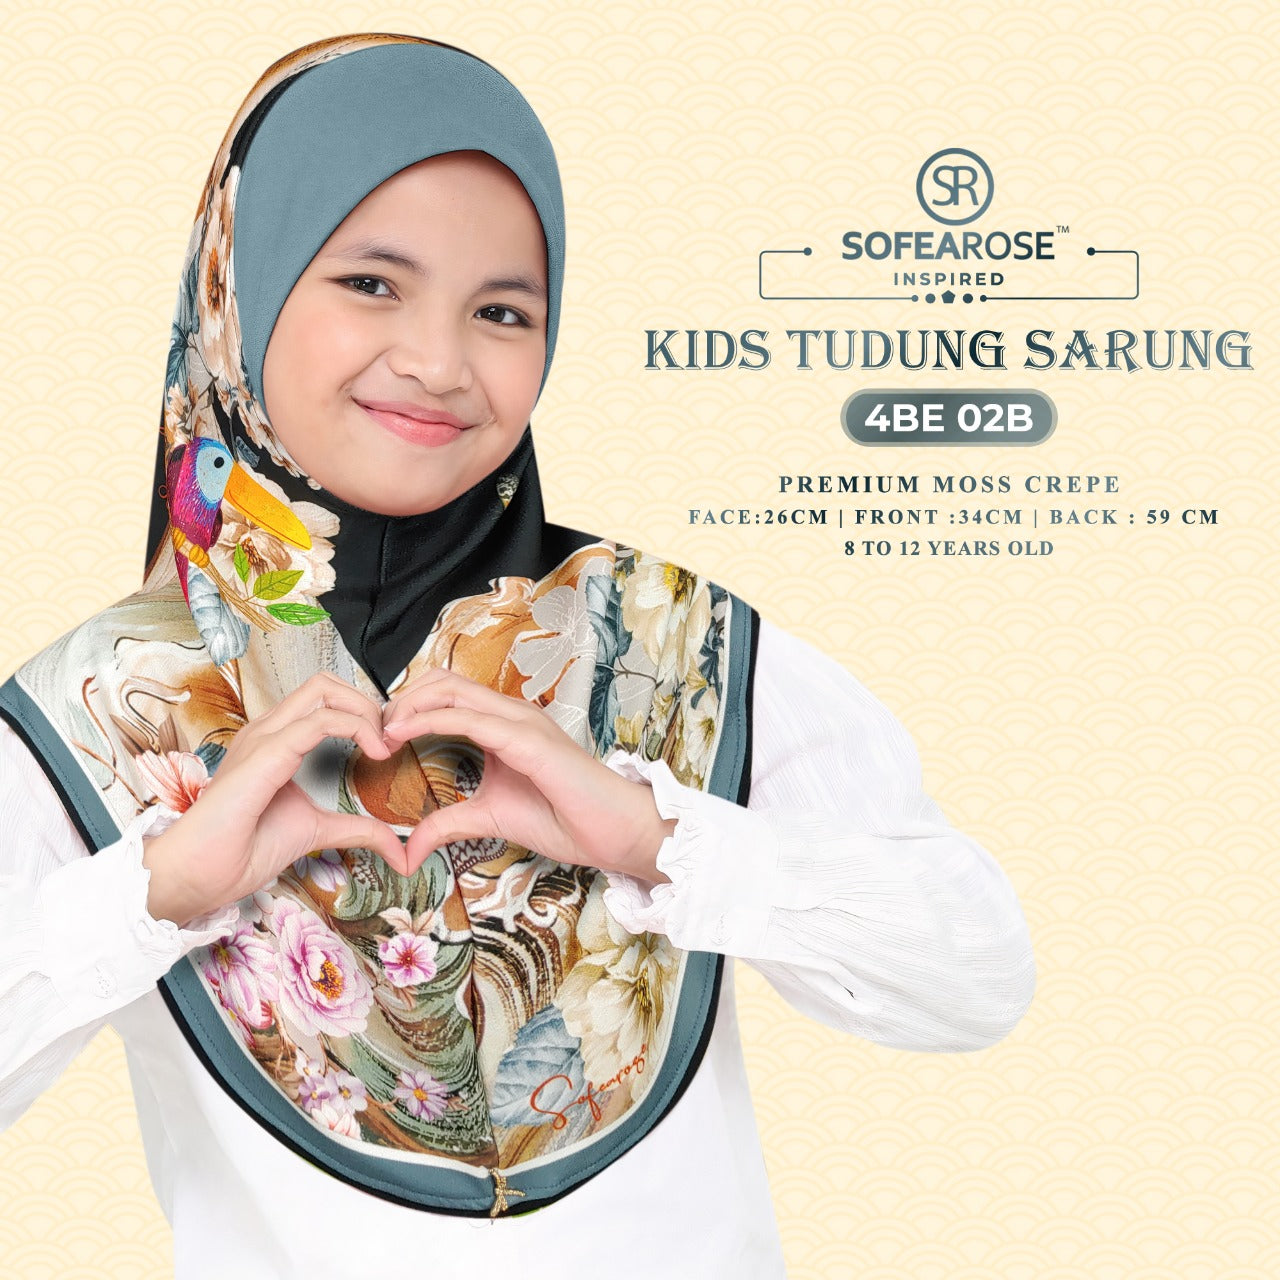 Sofearose Kid Tudung Sarung Collection RM9